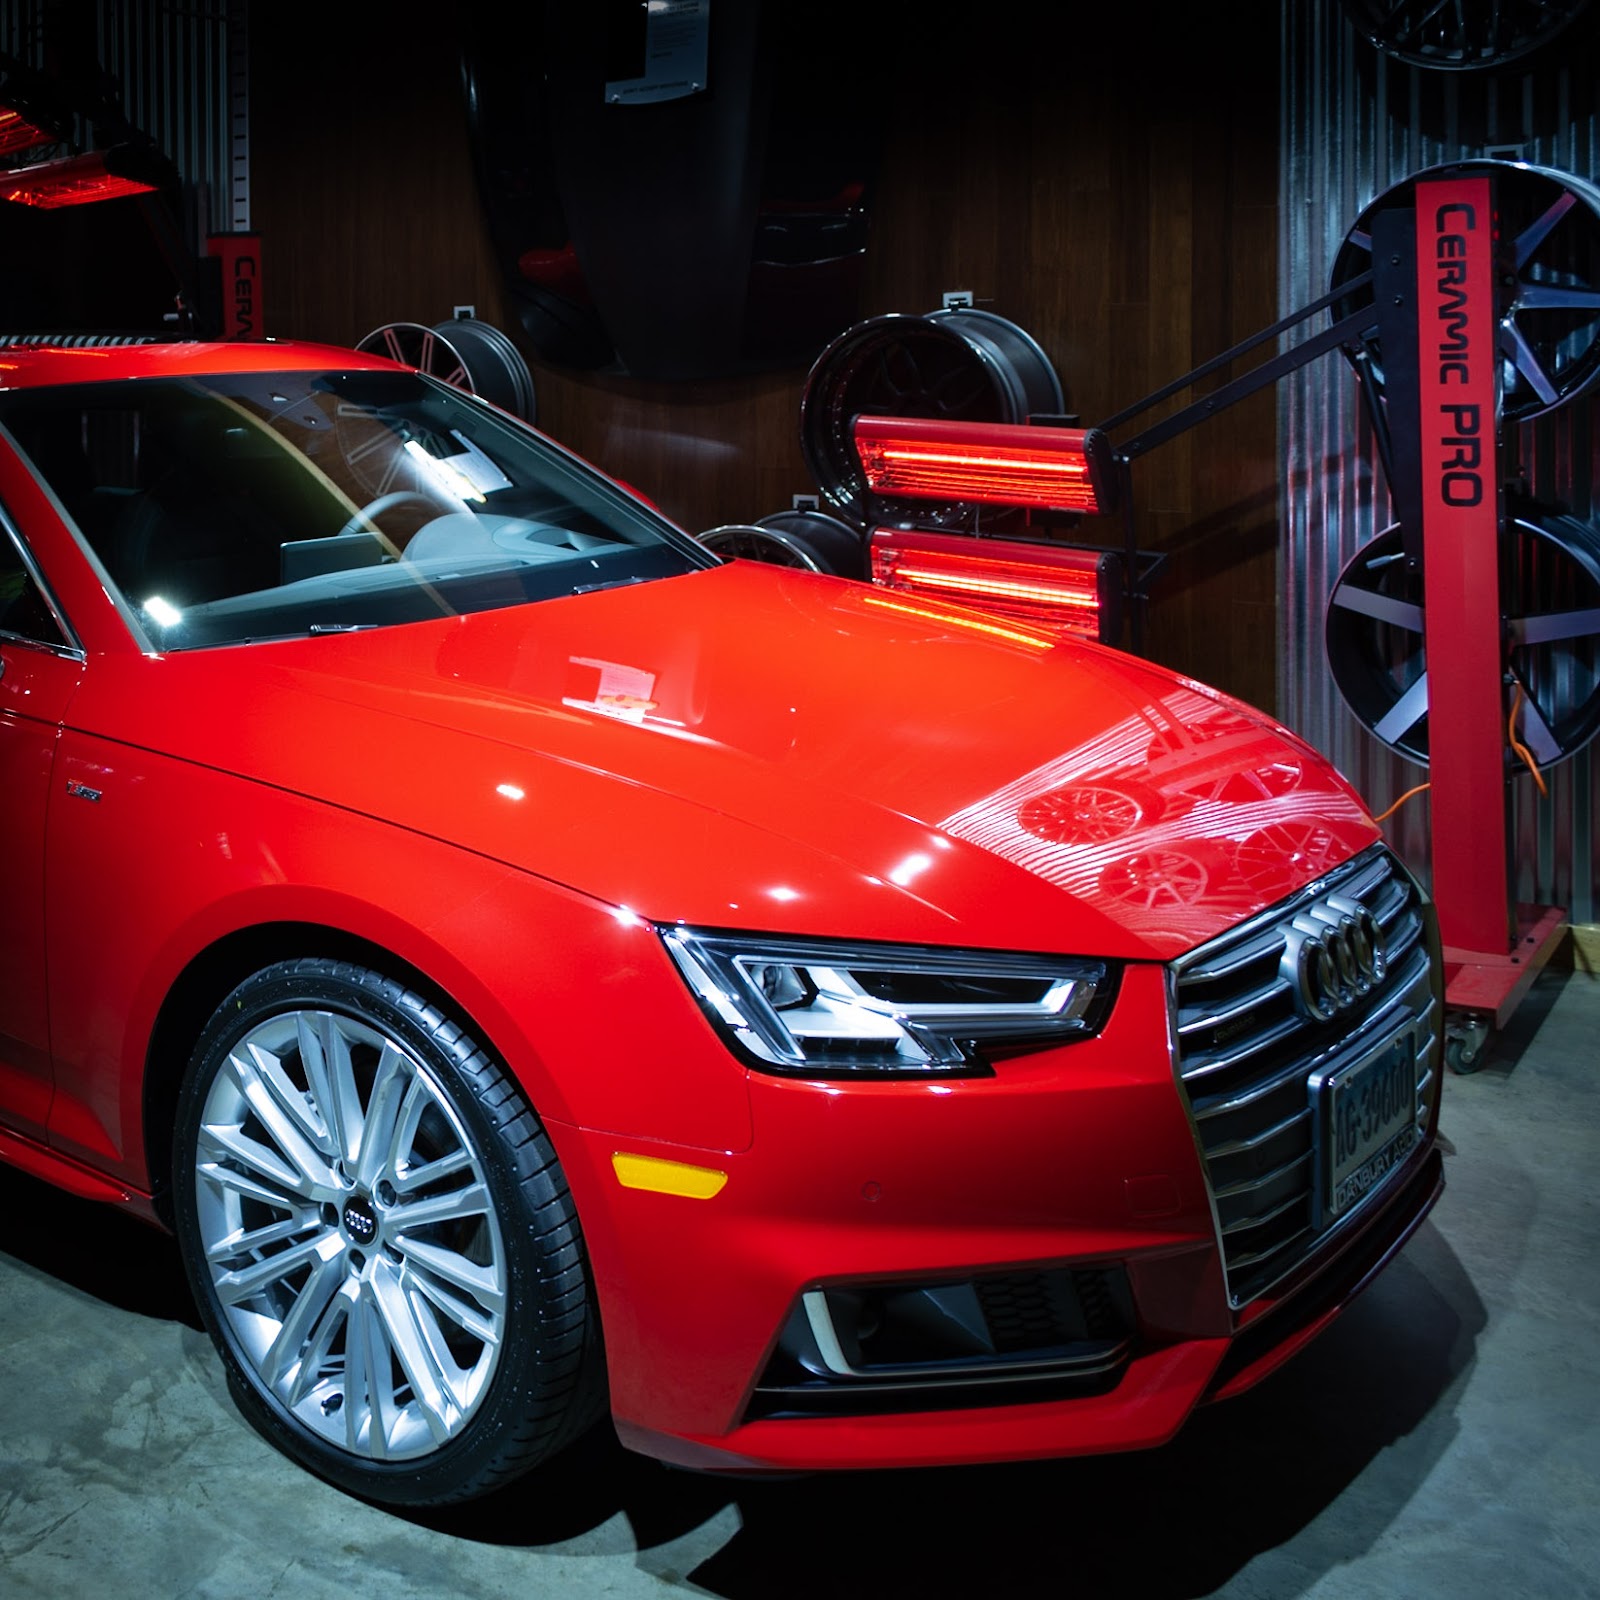 Car ceramic coating provides impeccable shine on this red Audi sedan